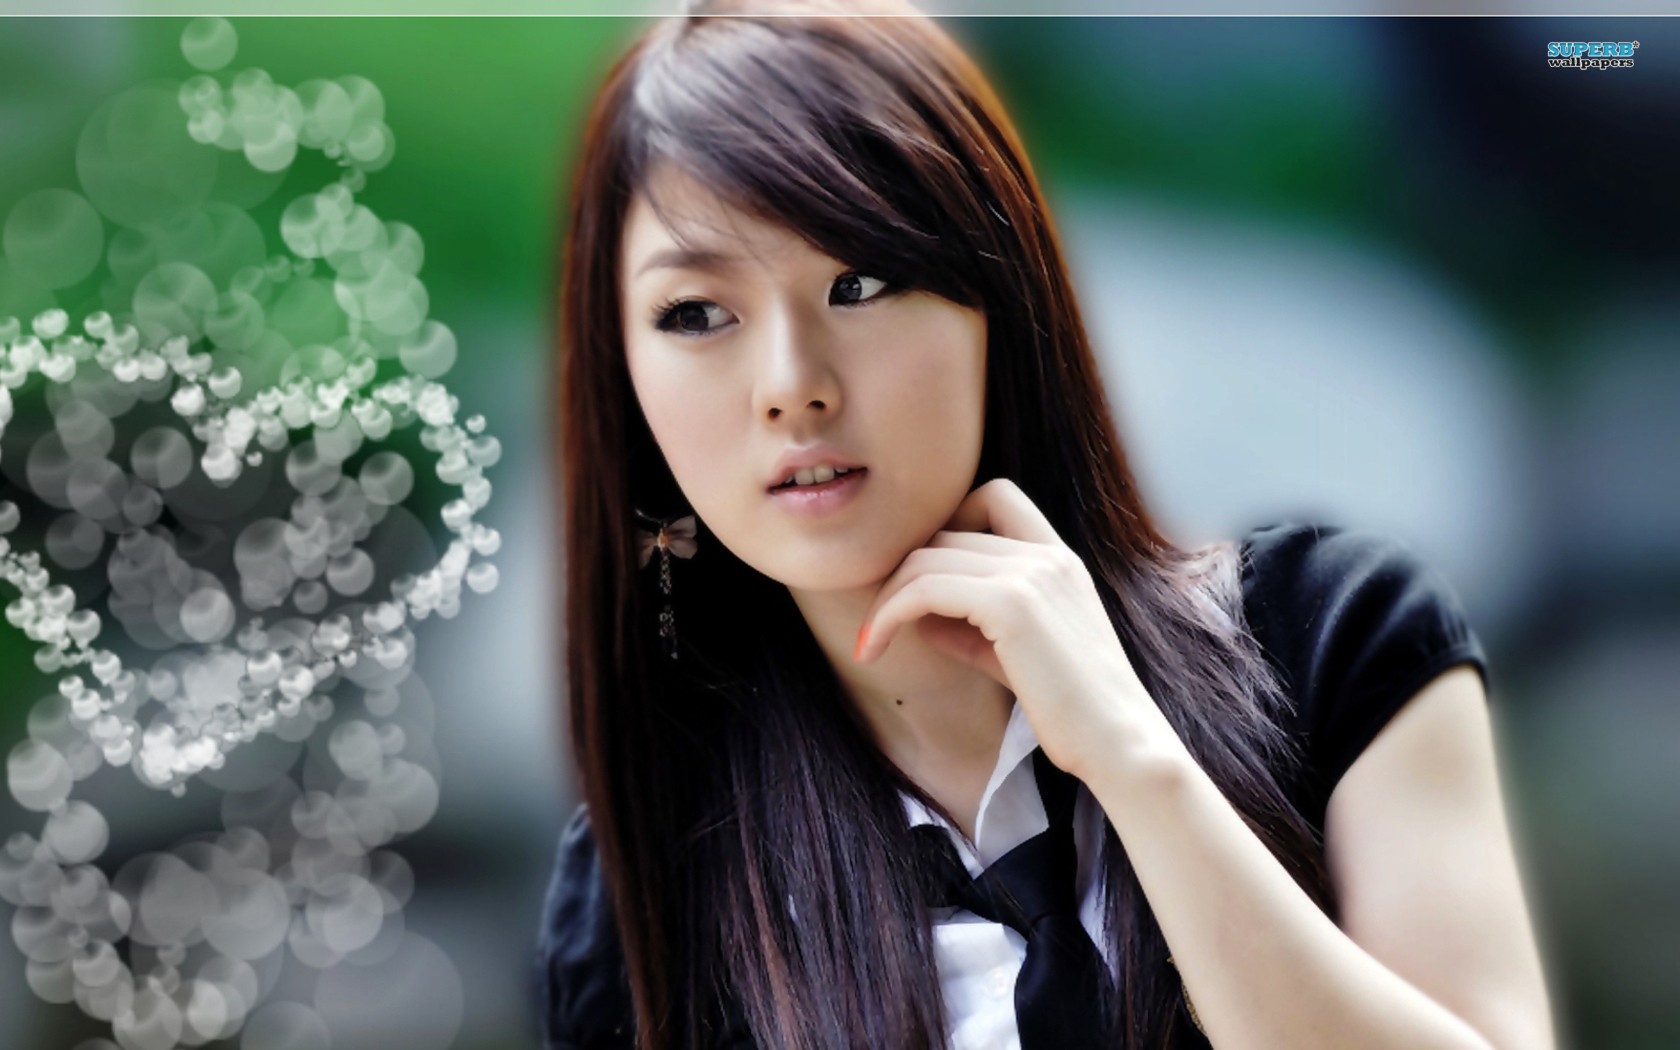 hwang mi hee asian women brunette model photo manipulation Wallpaper